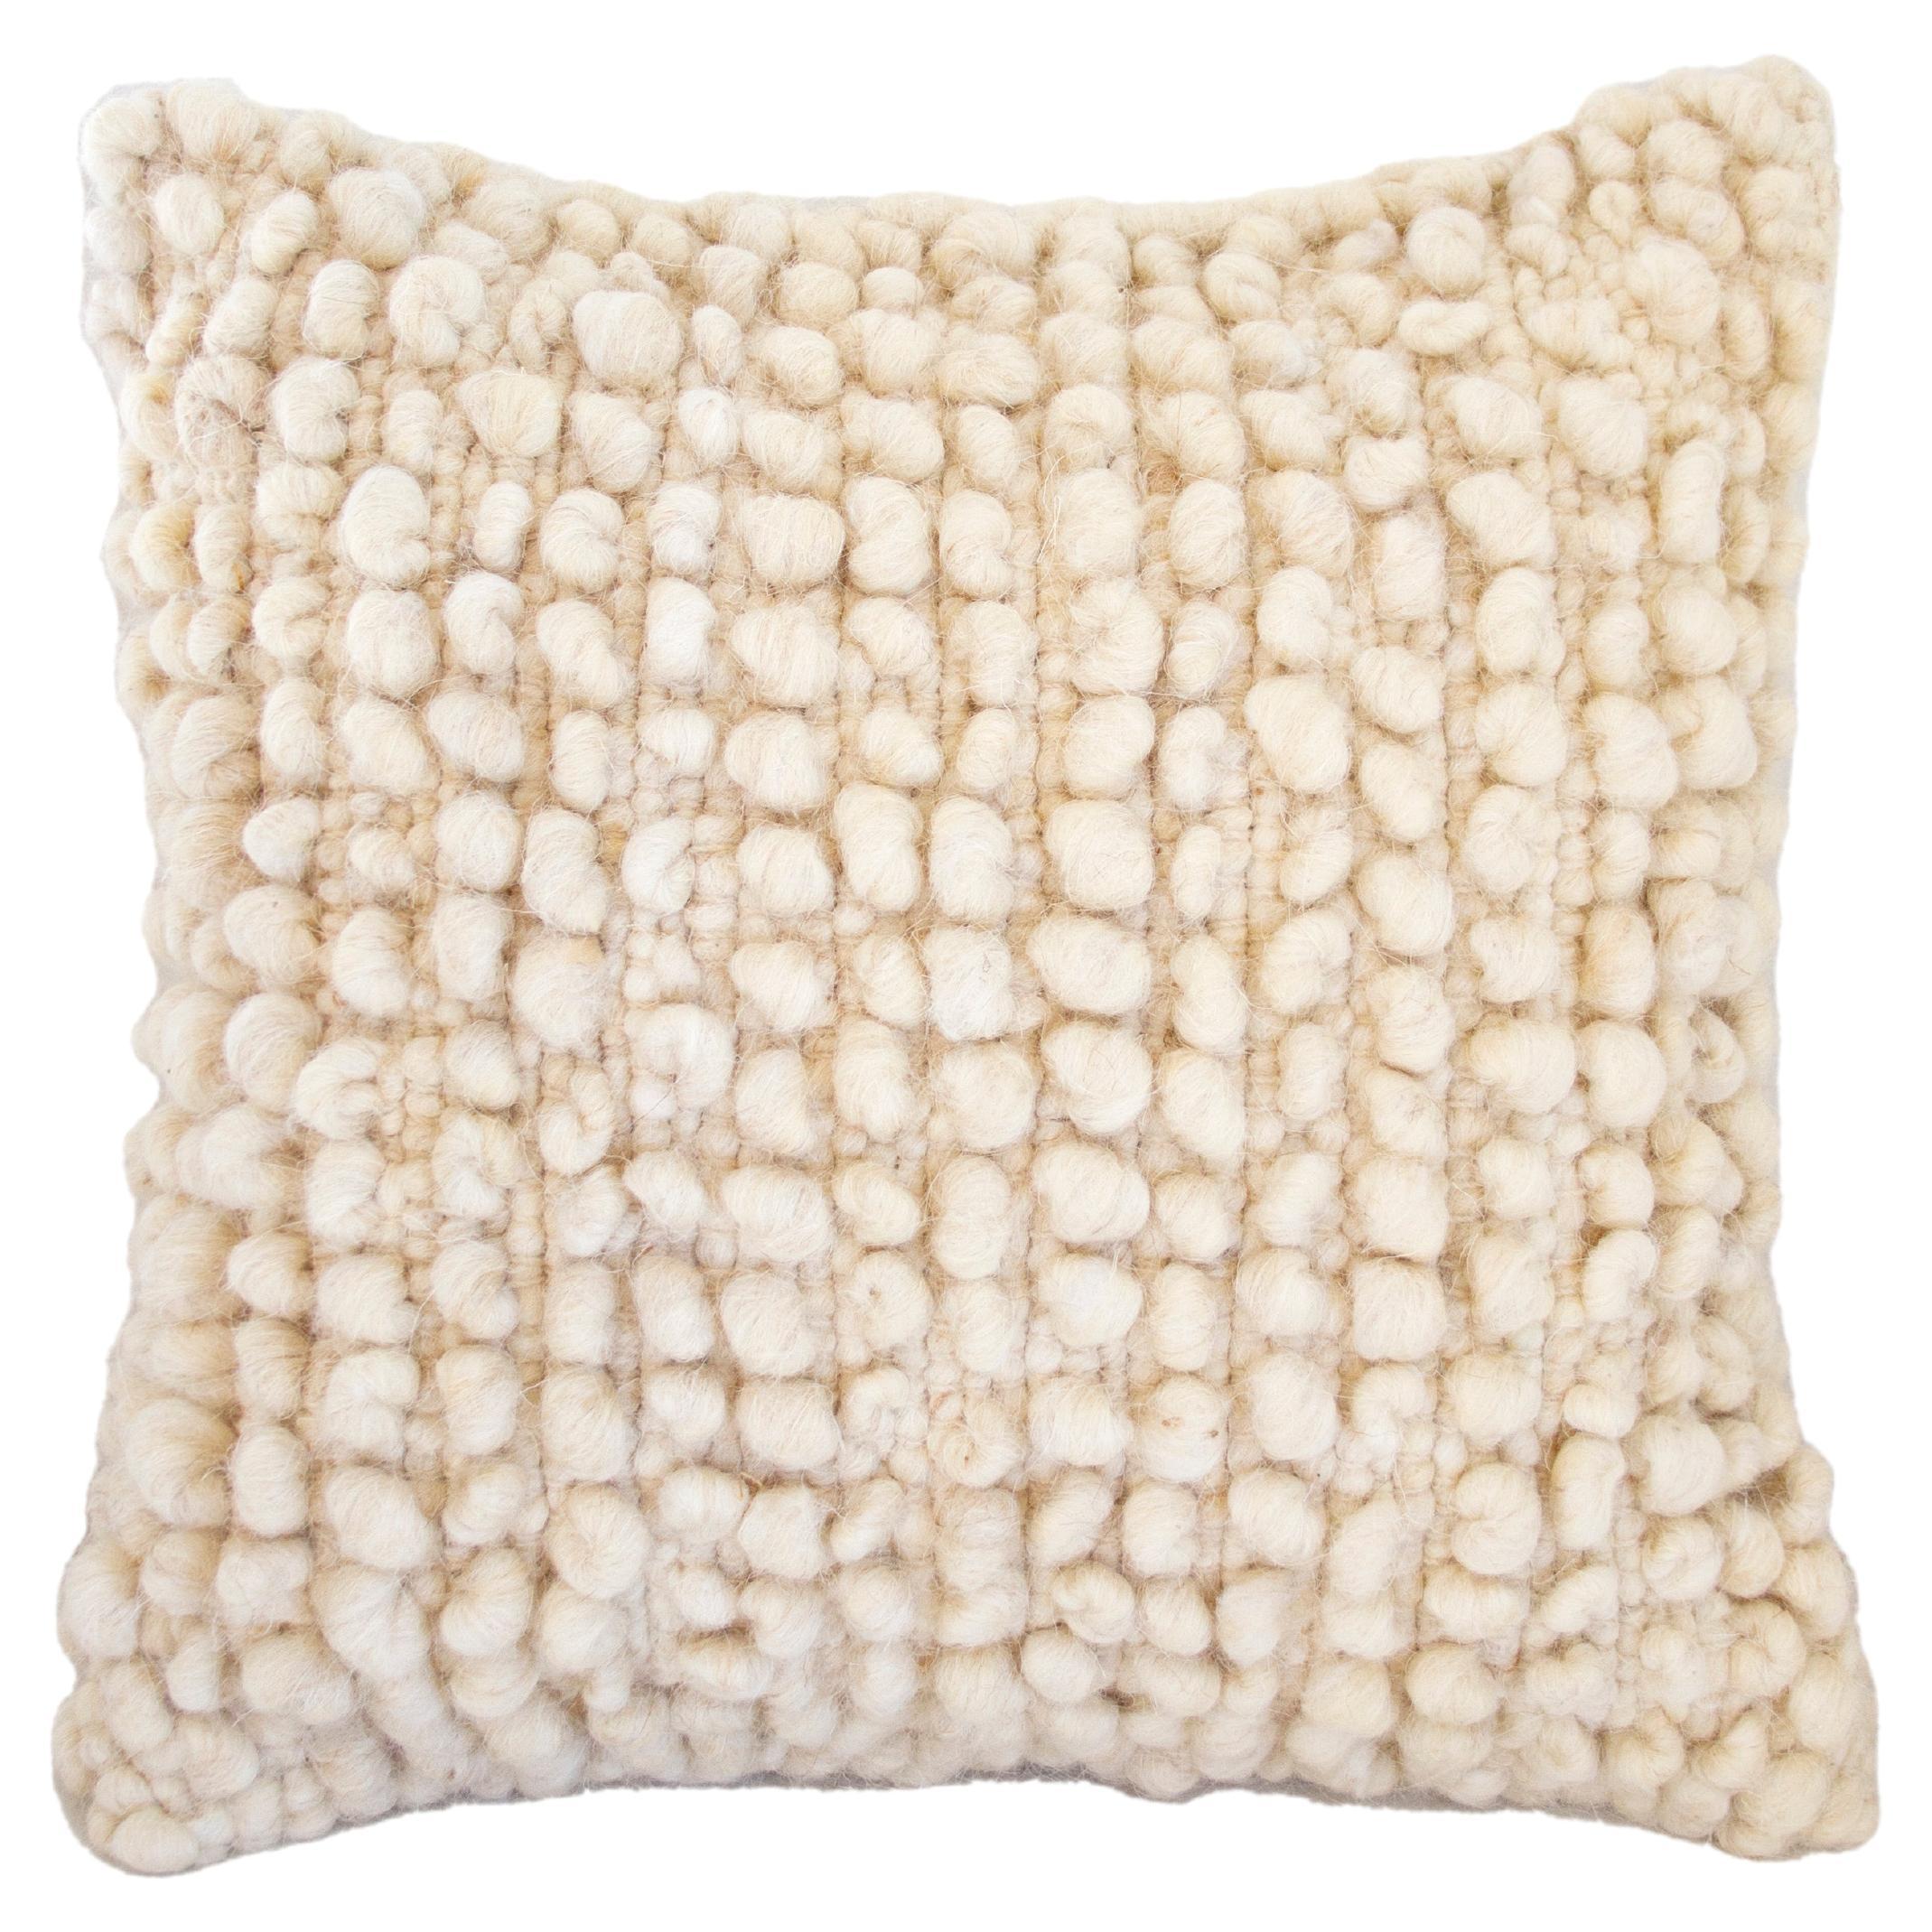 Fatima Bobble Throw Pillow in Cream White en 100% laine de mouton - 20" x 20".